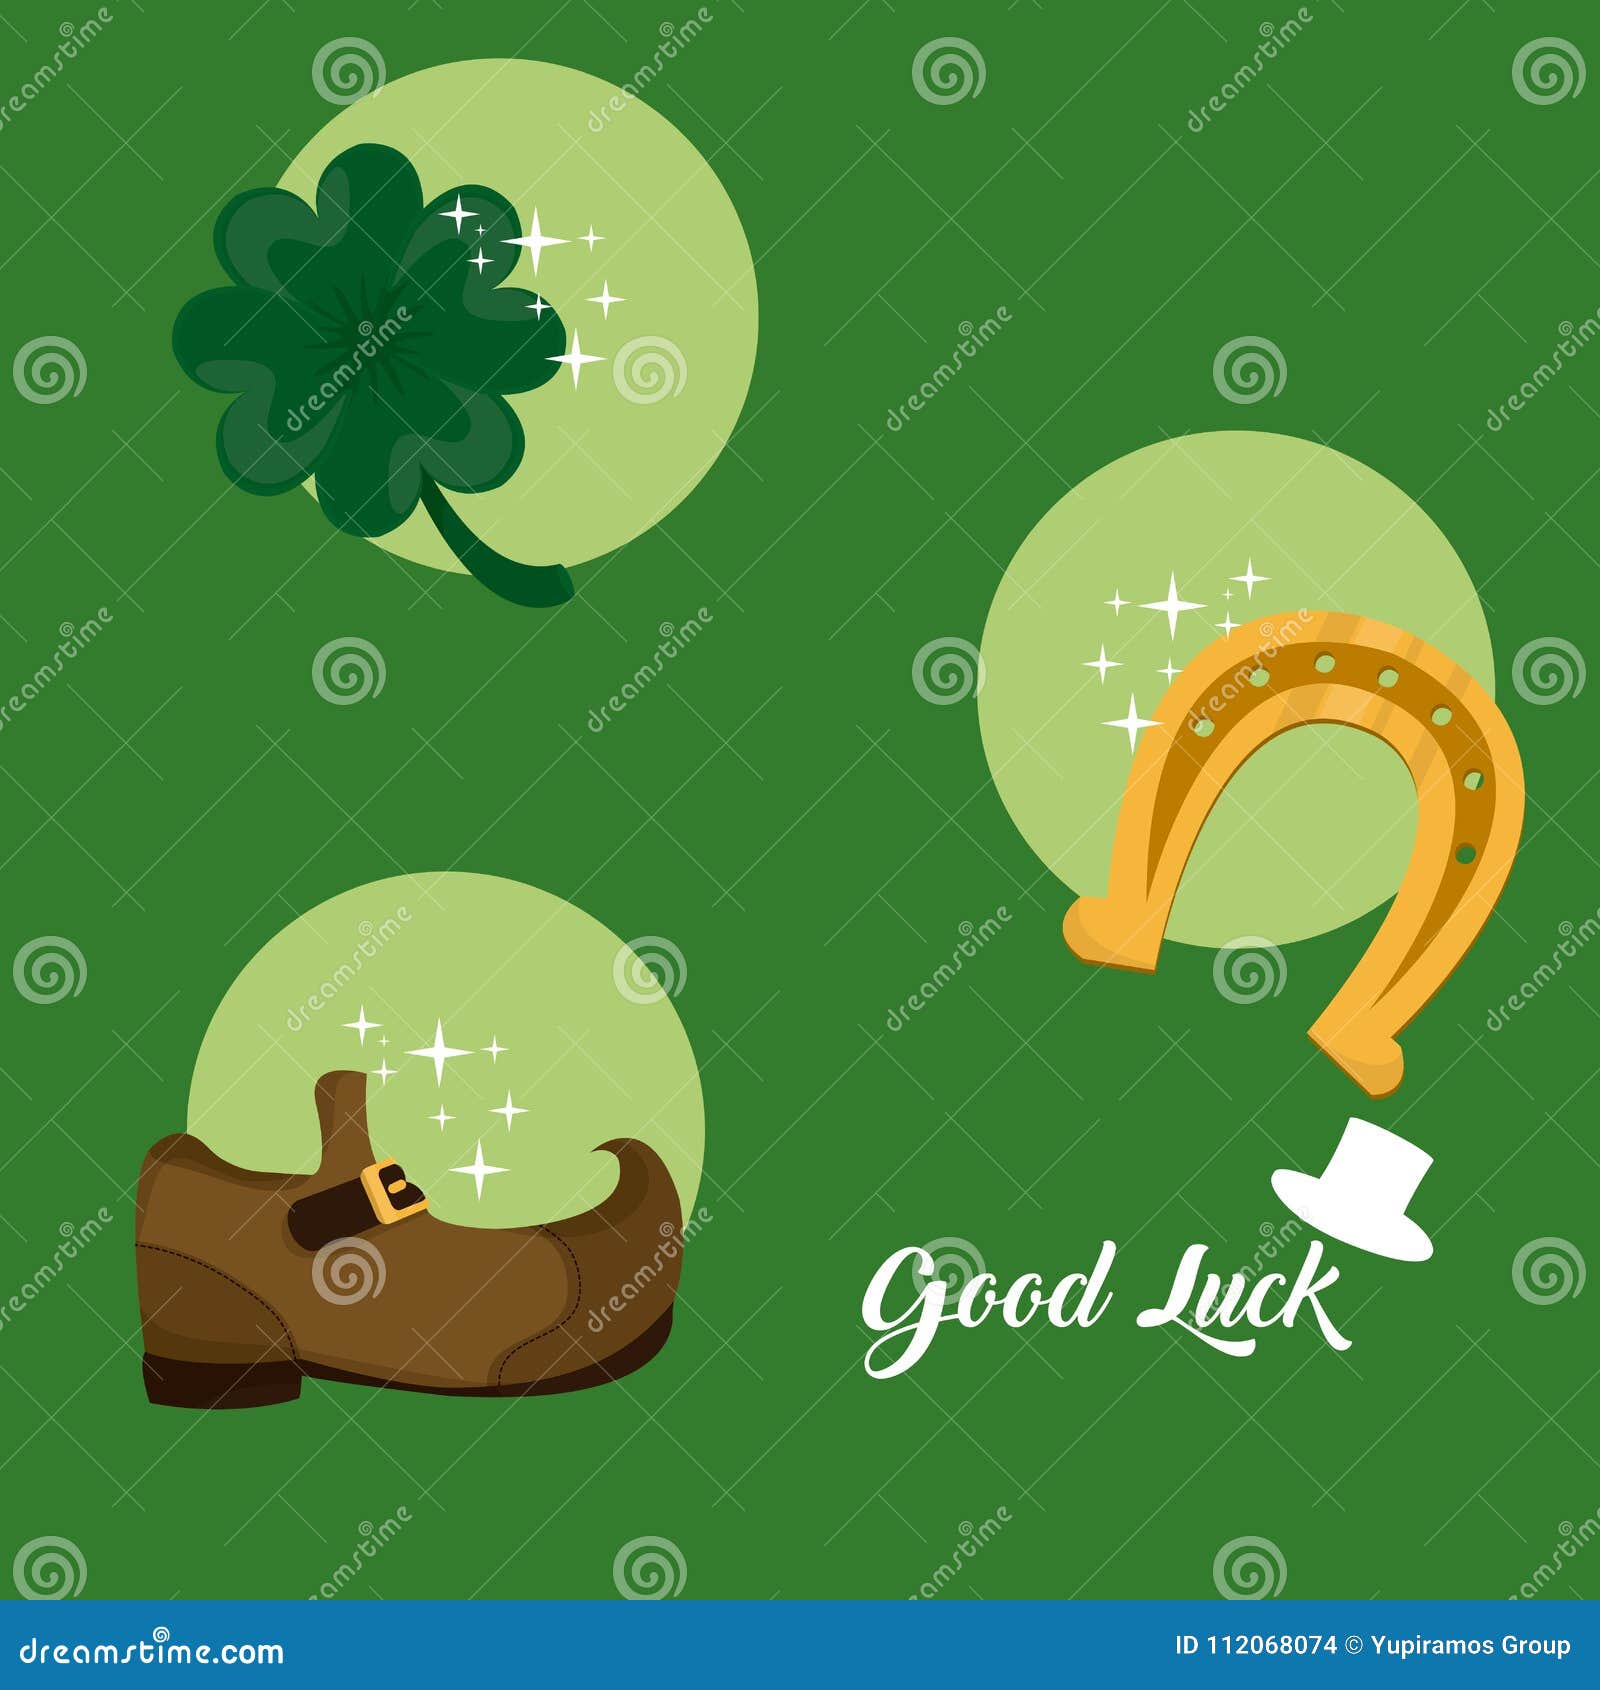 Good Luck And Saint Patricks Day Symbols Stock Vector ...